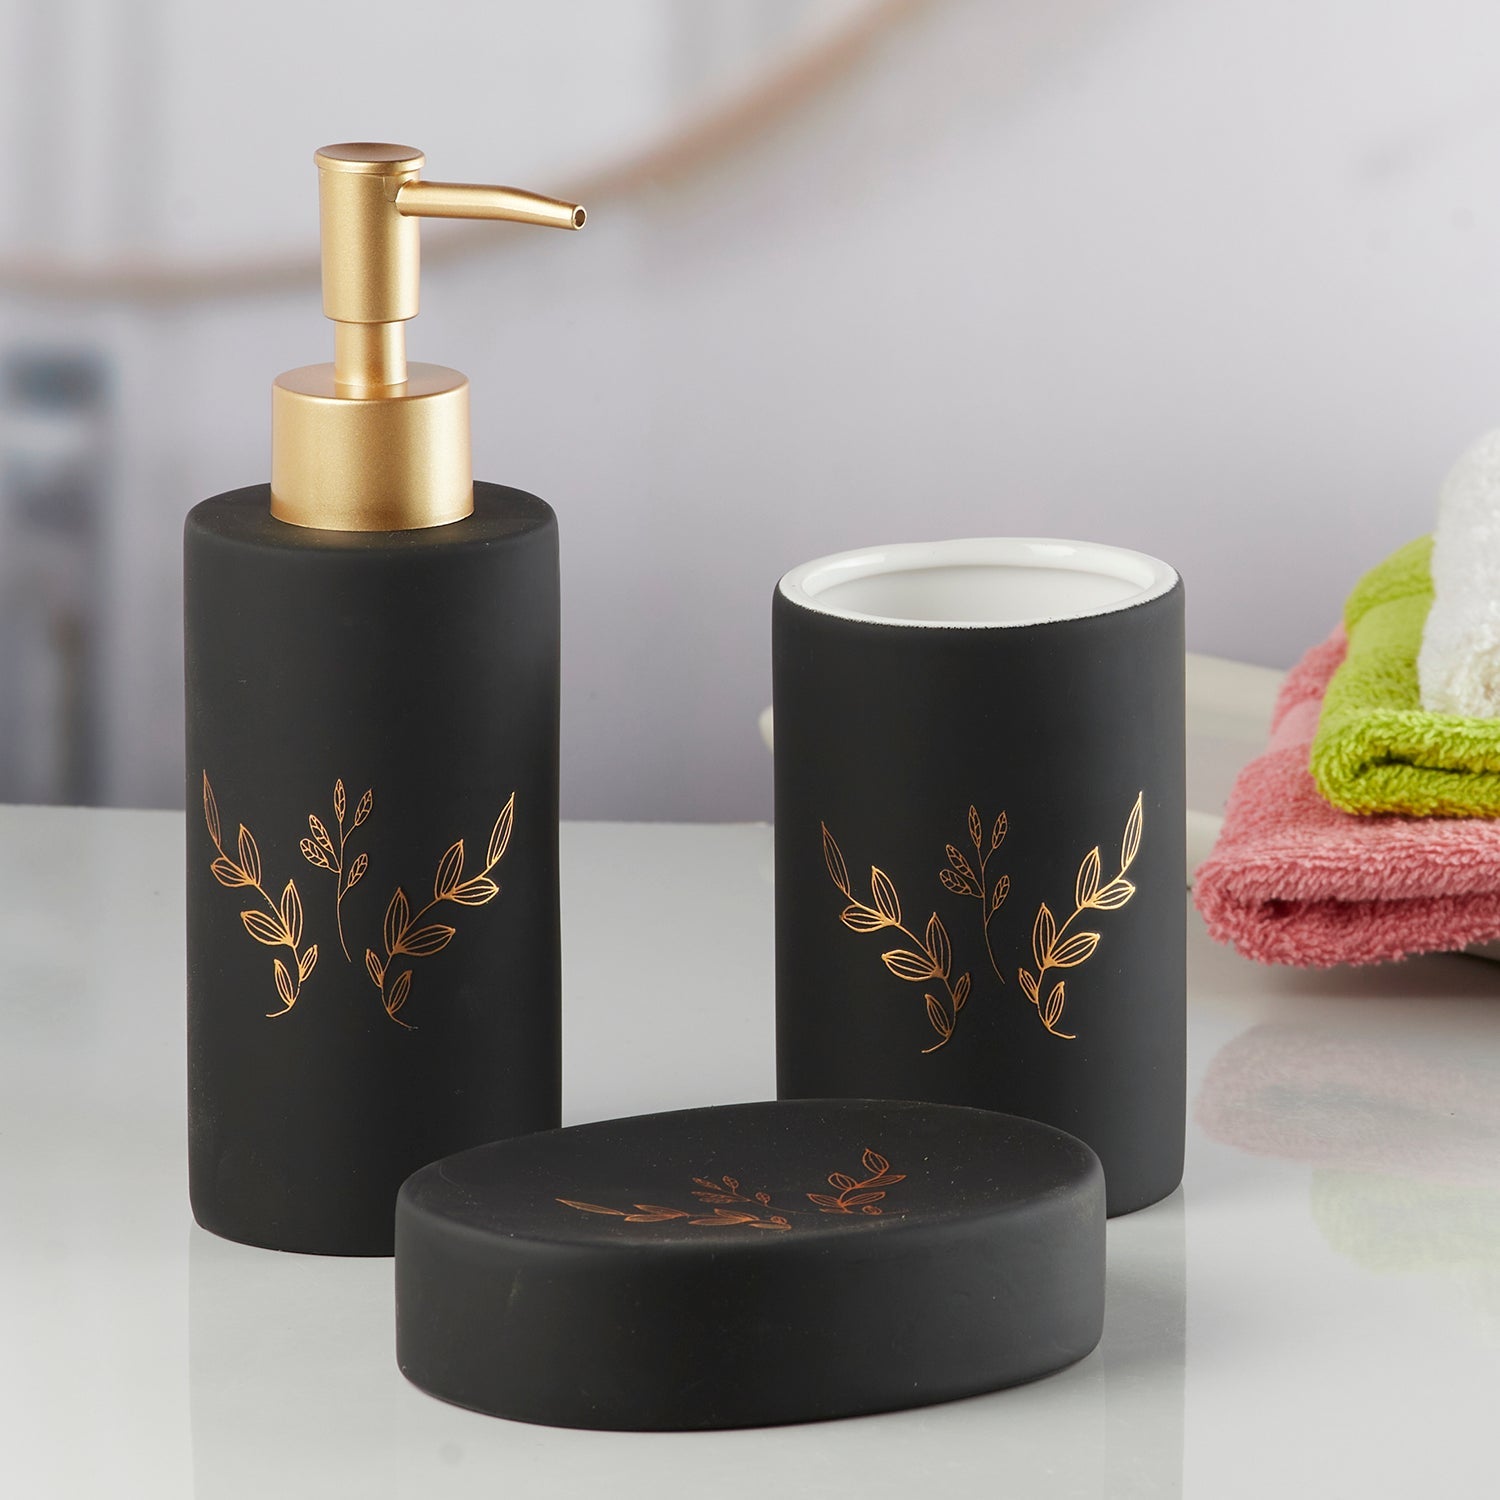 Ceramic Bathroom Accessories Set of 3 Bath Set with Soap Dispenser (7644)